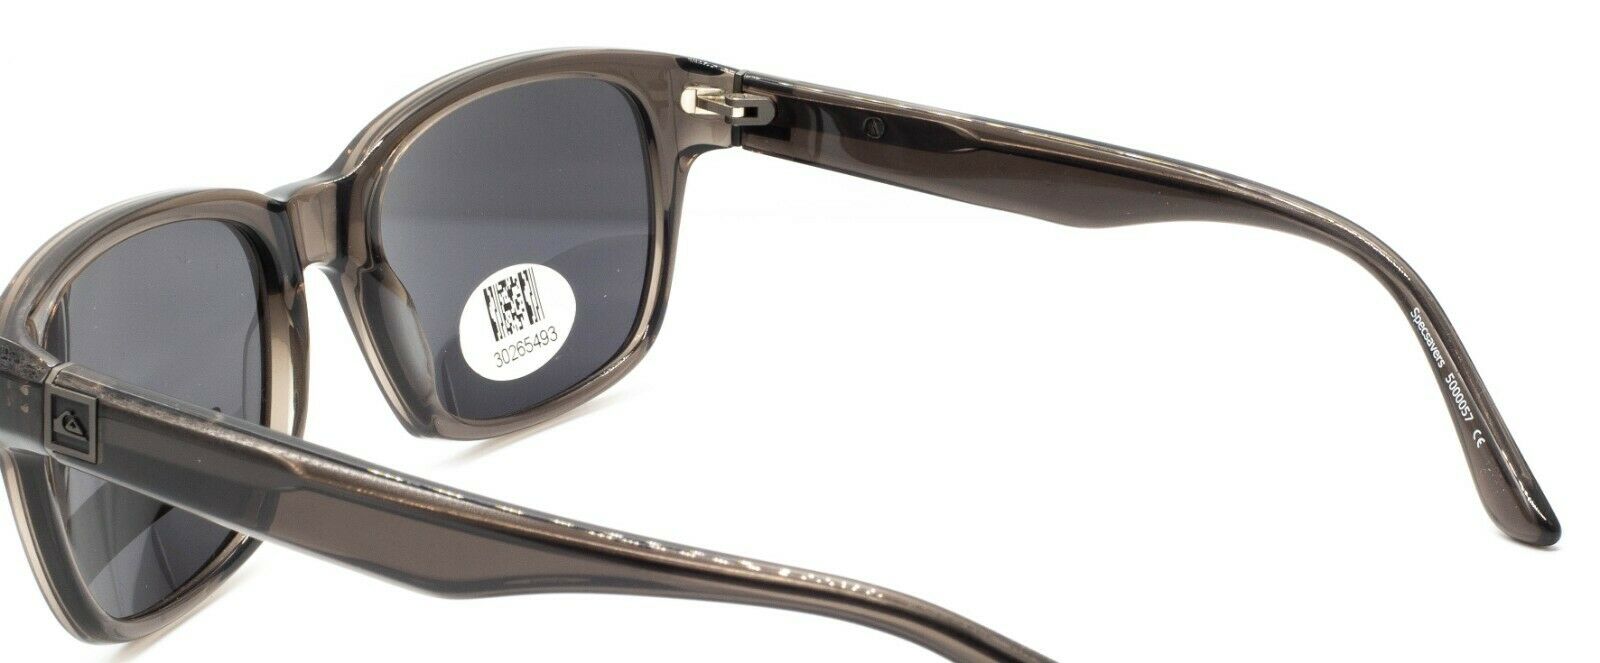 QUIKSILVER QS 101 - 30265493 Sun Sunglasses Rx Shades Eyewear Eyewear GGV - Glasses 55mm New